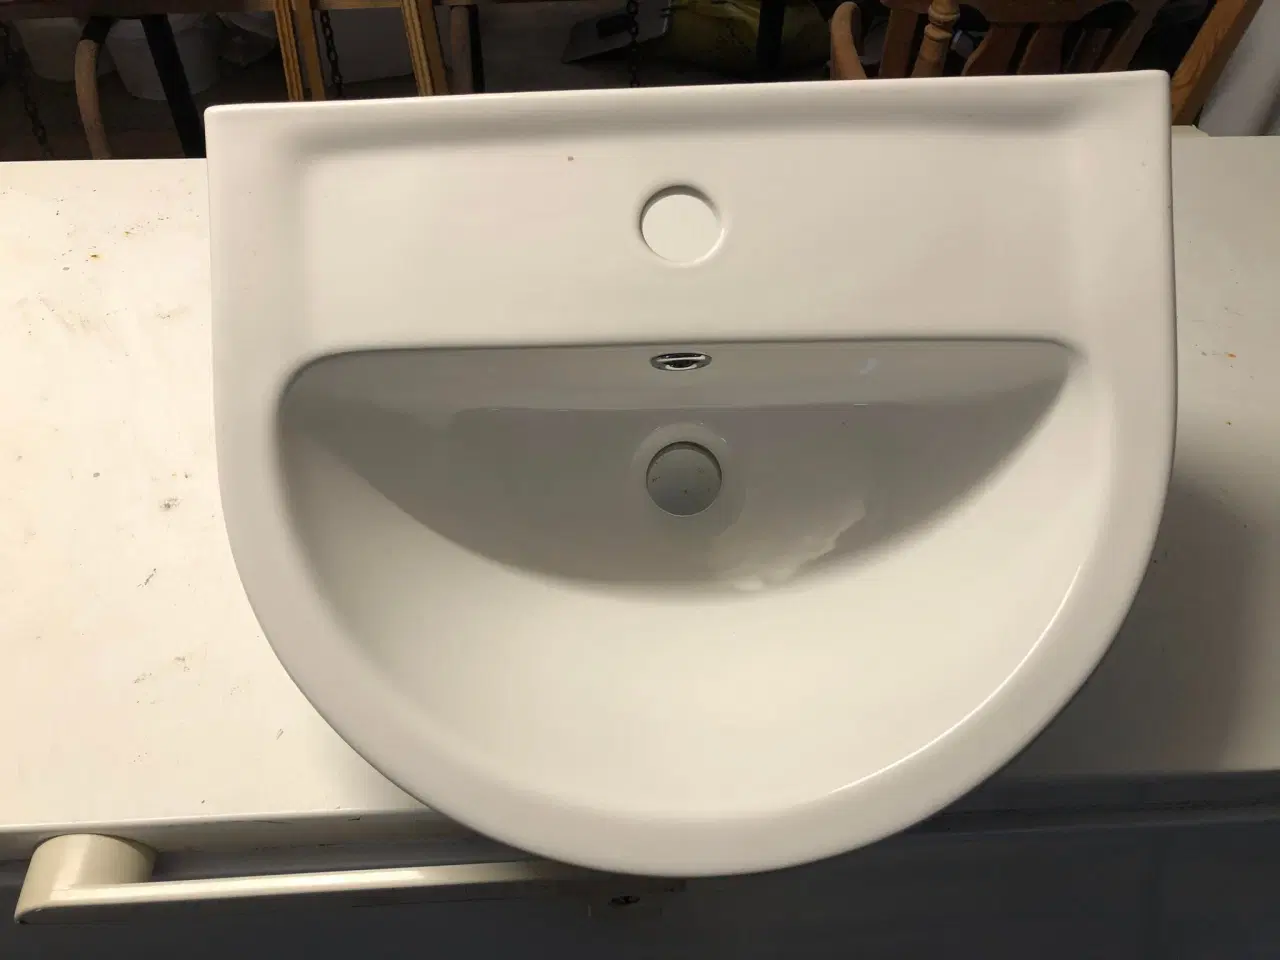 Billede 1 - Helt ny - hvid håndvask